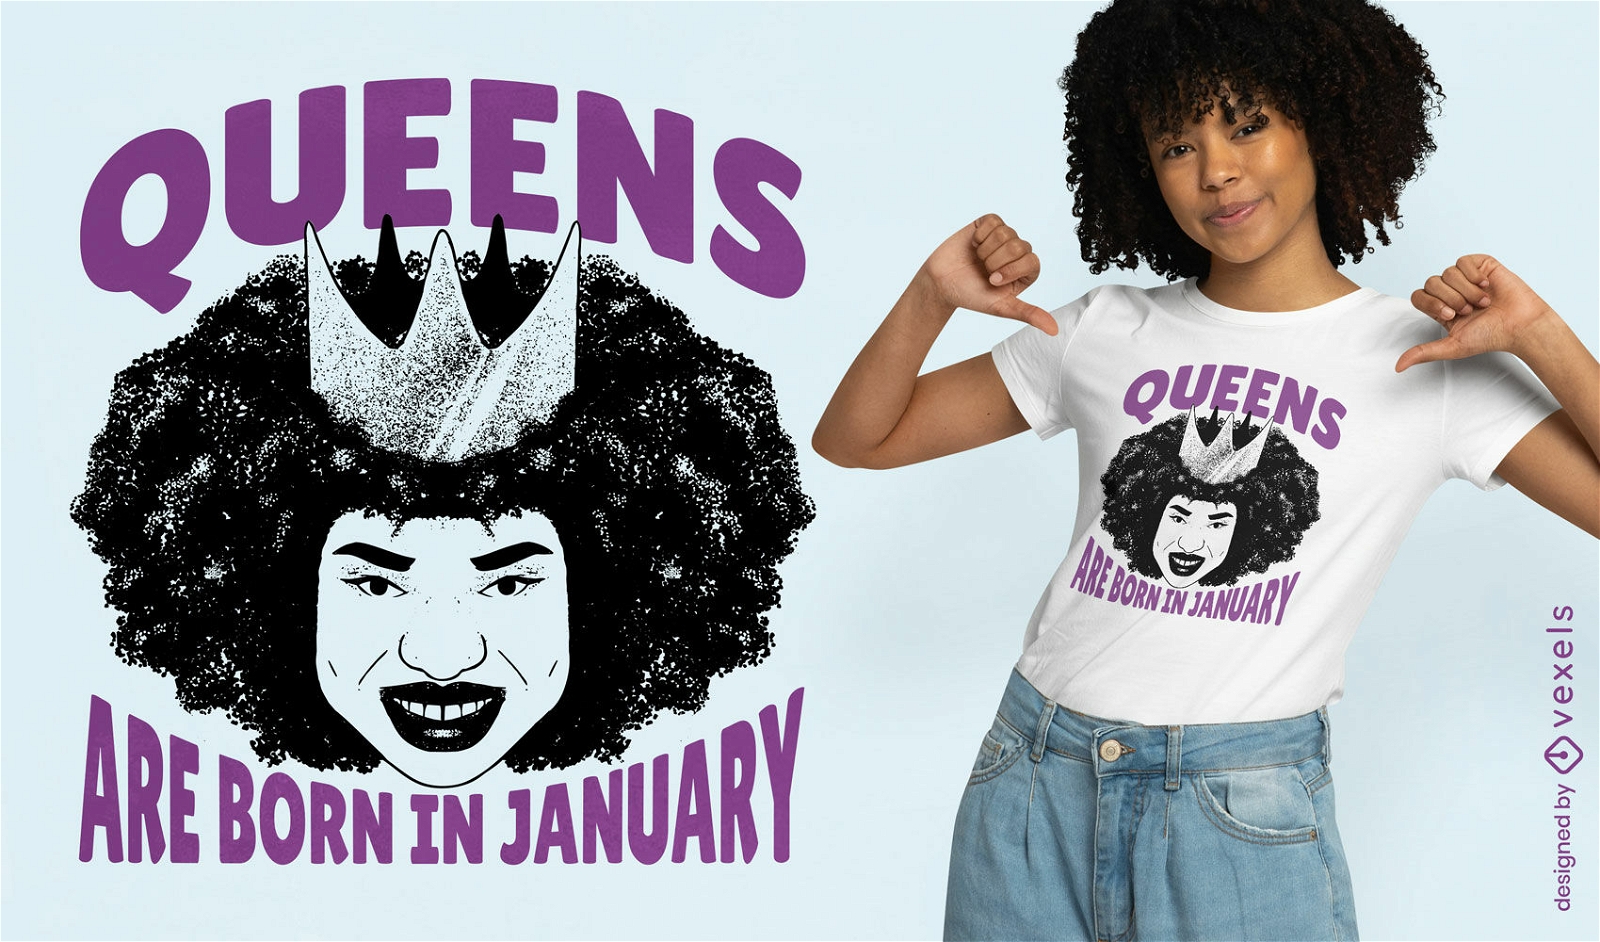 Birthday queen t-shirt design